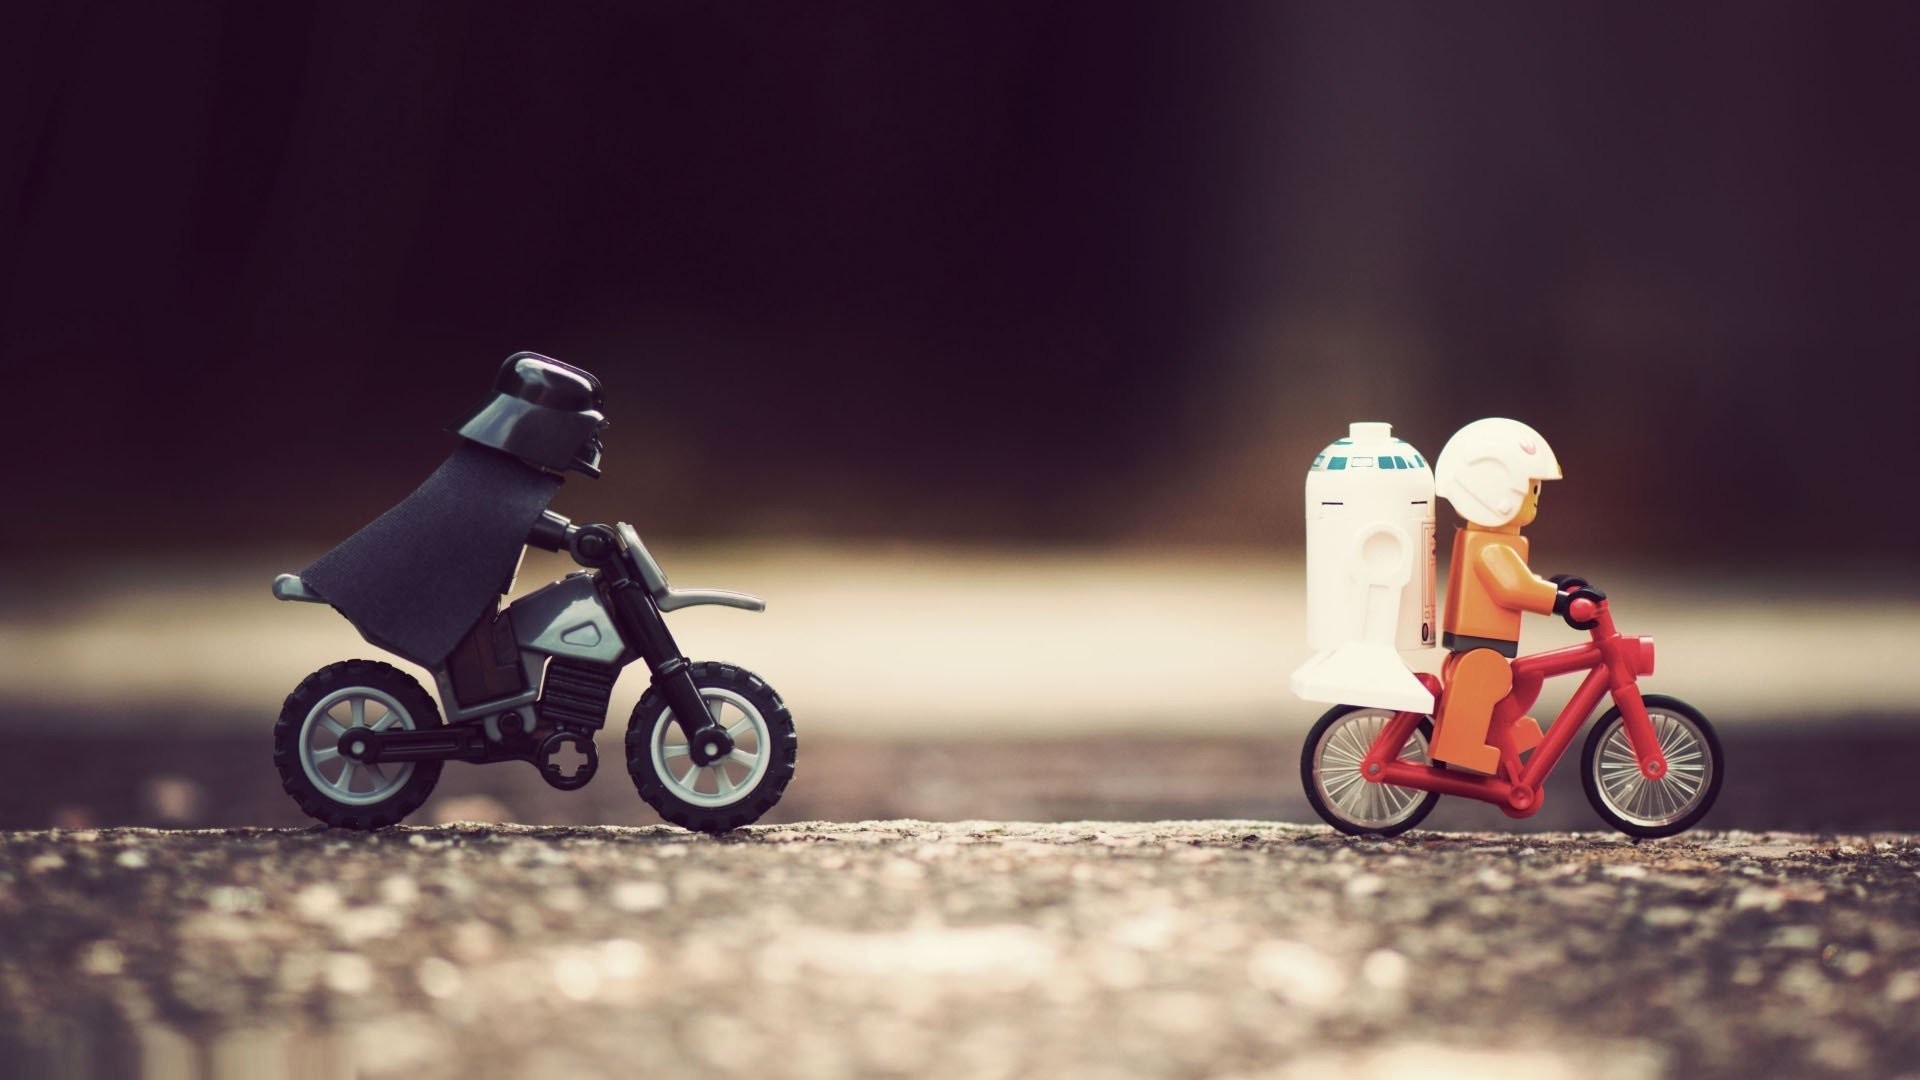 1920x1080 Darth Vader Chasing Luke And R2-D2 On Bikes Wallpaper .